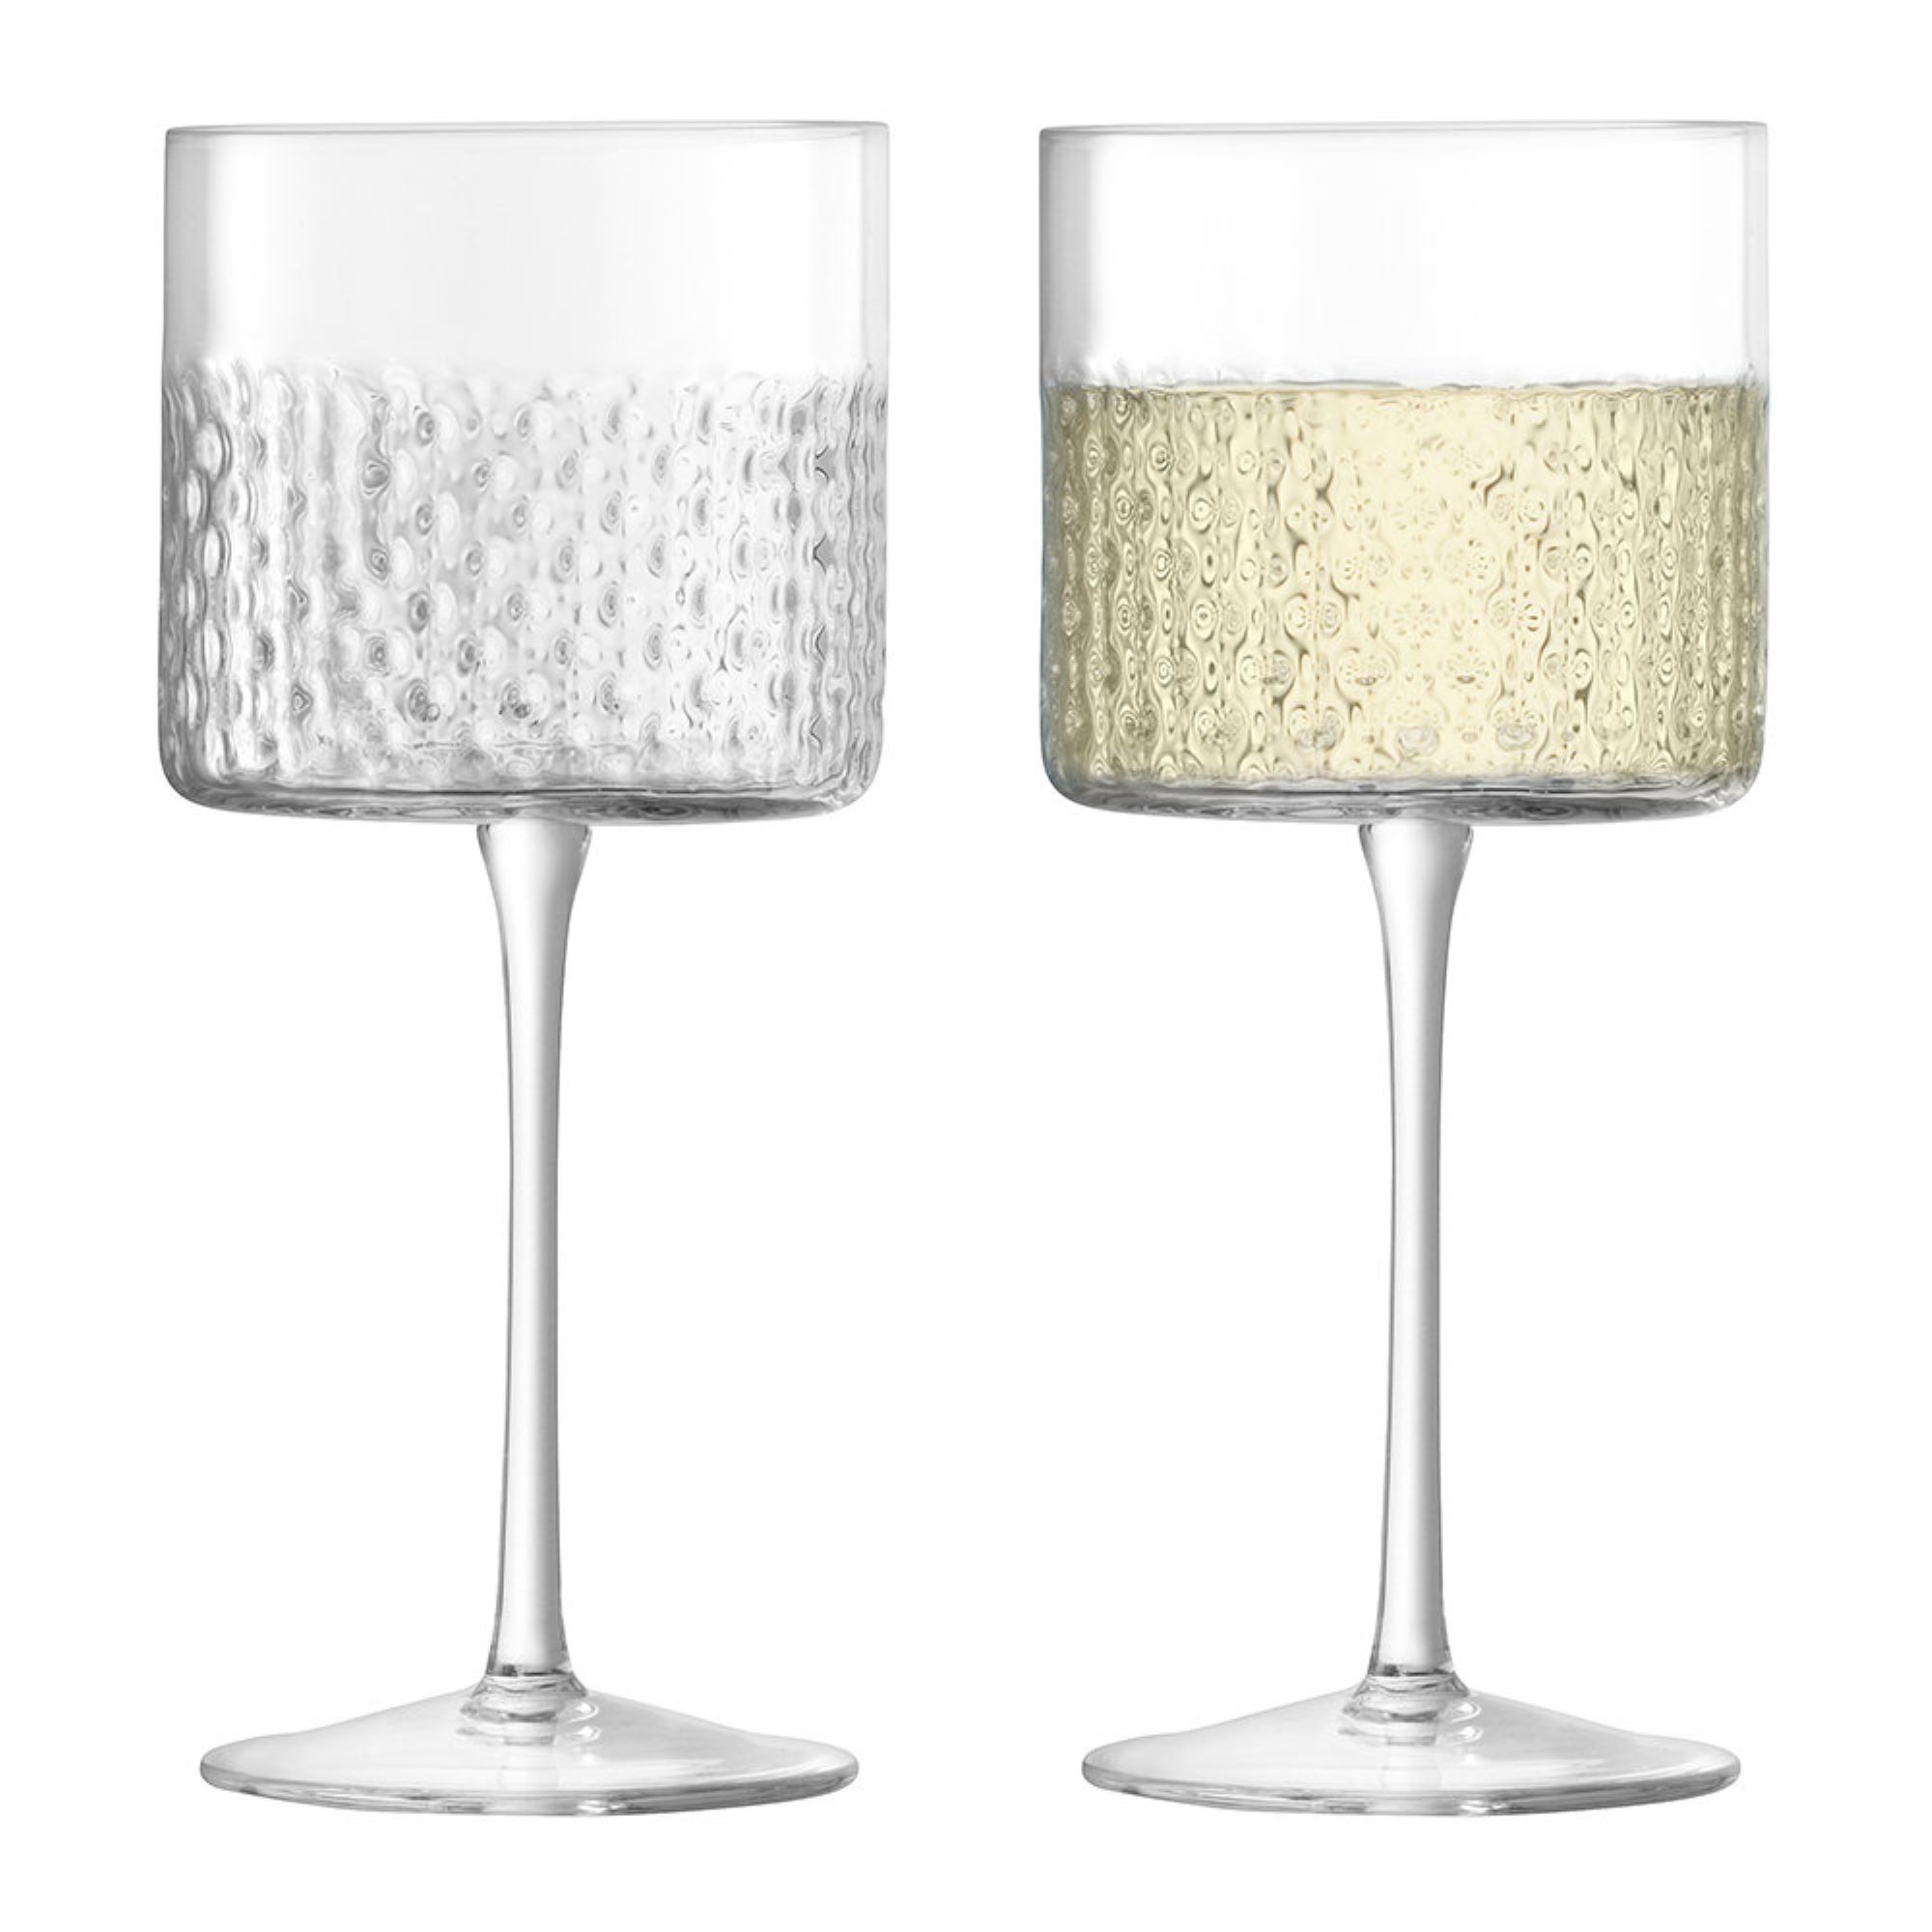 LSA International Wicker Wine Glasses - Set of 2 - Clear